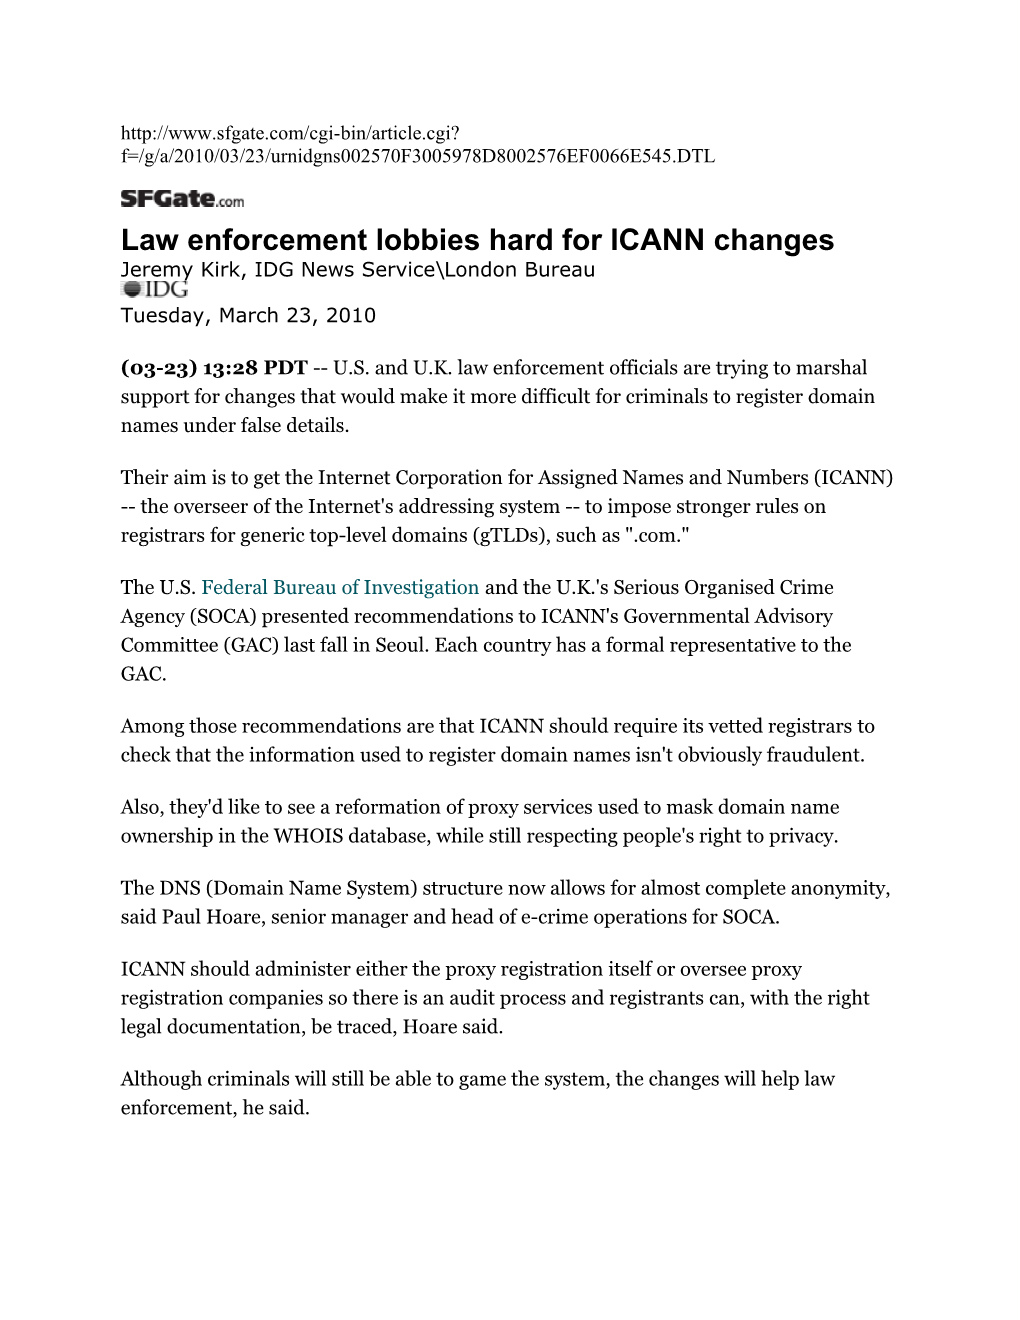 Law Enforcement Lobbies Hard for ICANN Changes - Sfgate